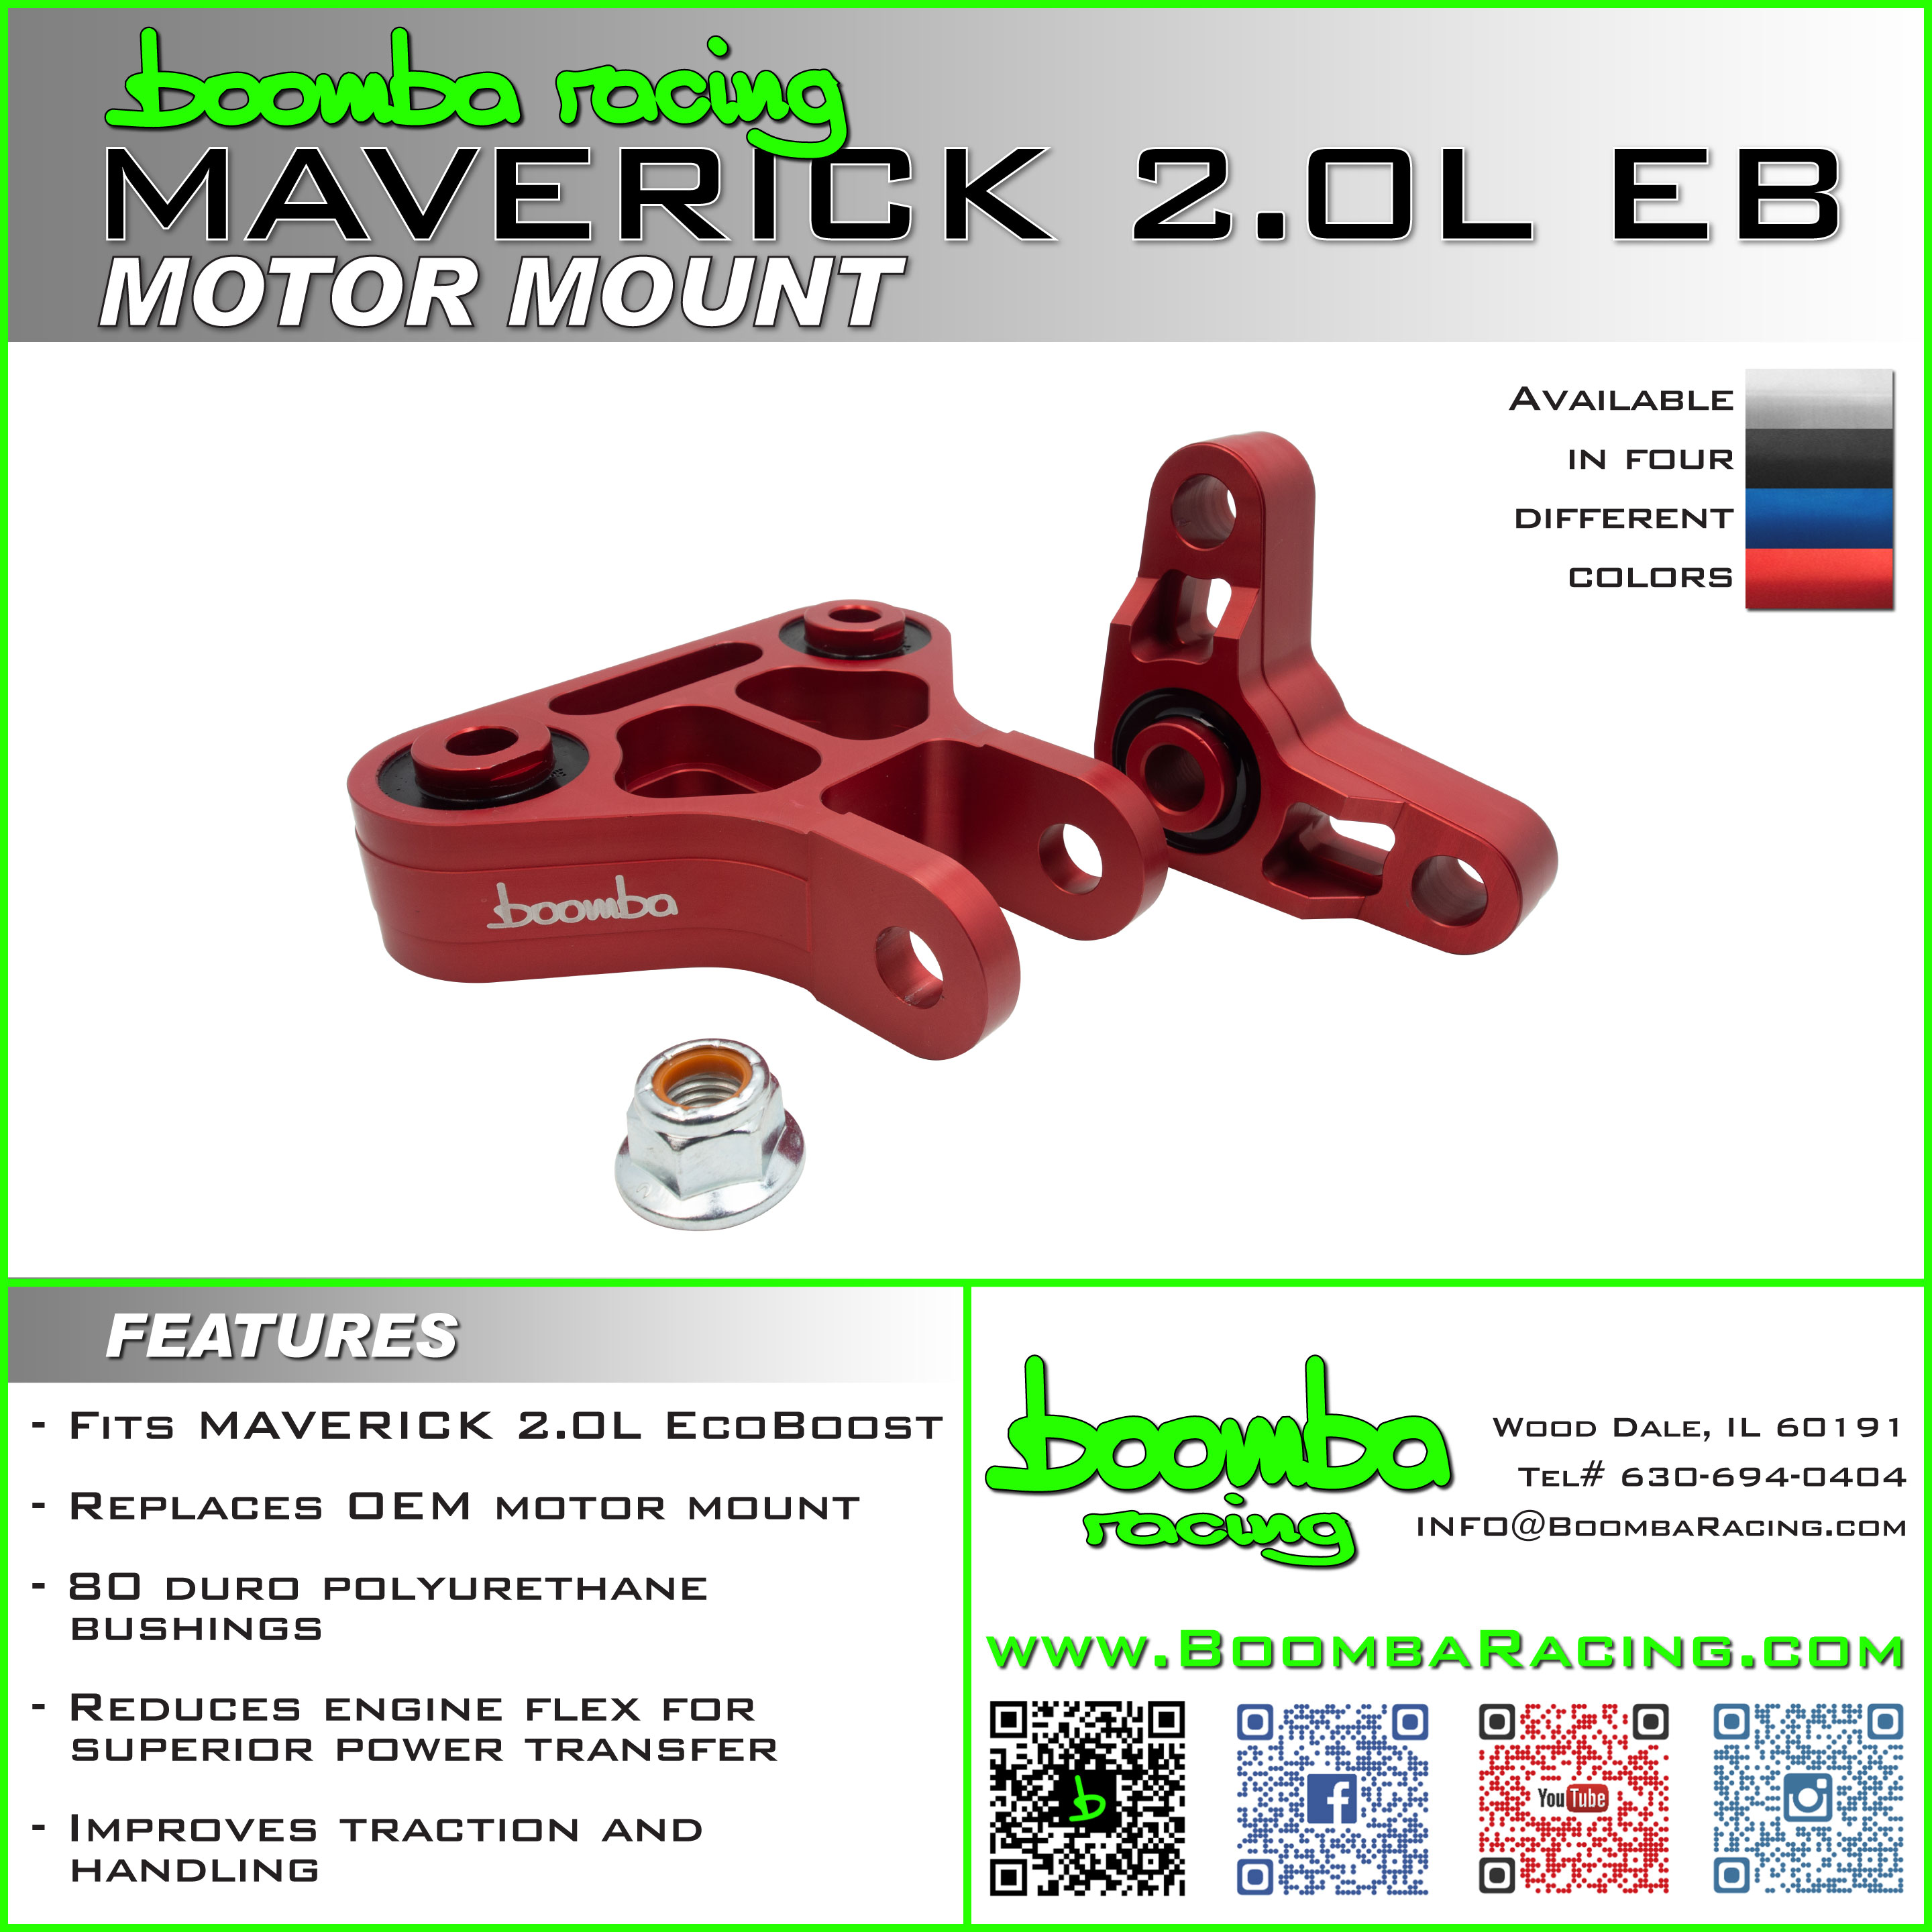 Ford_Maverick_2.0L_Motor_Mount_Flyer.jpg